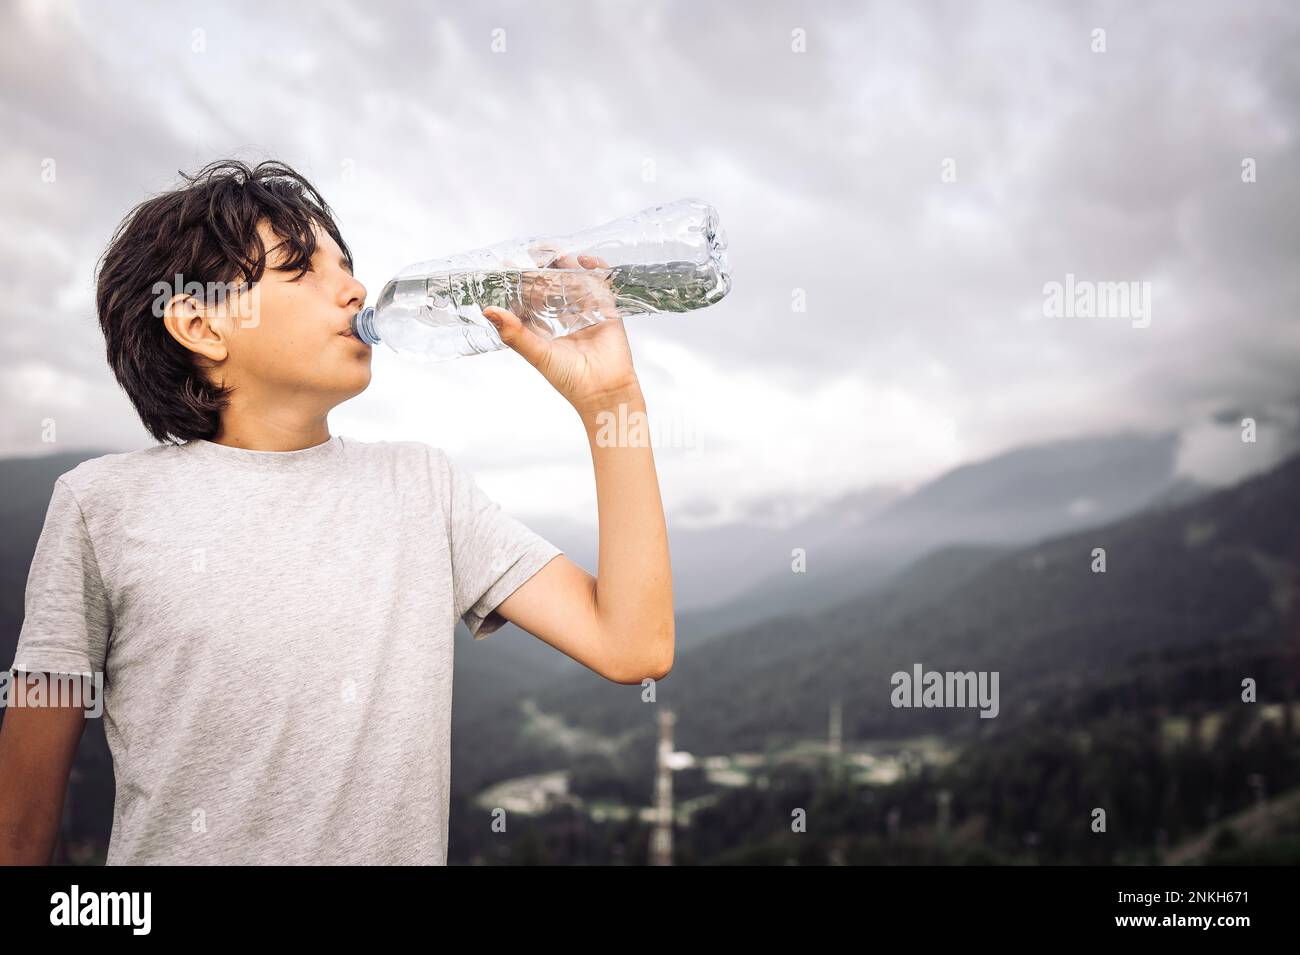 https://c8.alamy.com/comp/2NKH671/thirsty-boy-drinking-water-from-bottle-2NKH671.jpg